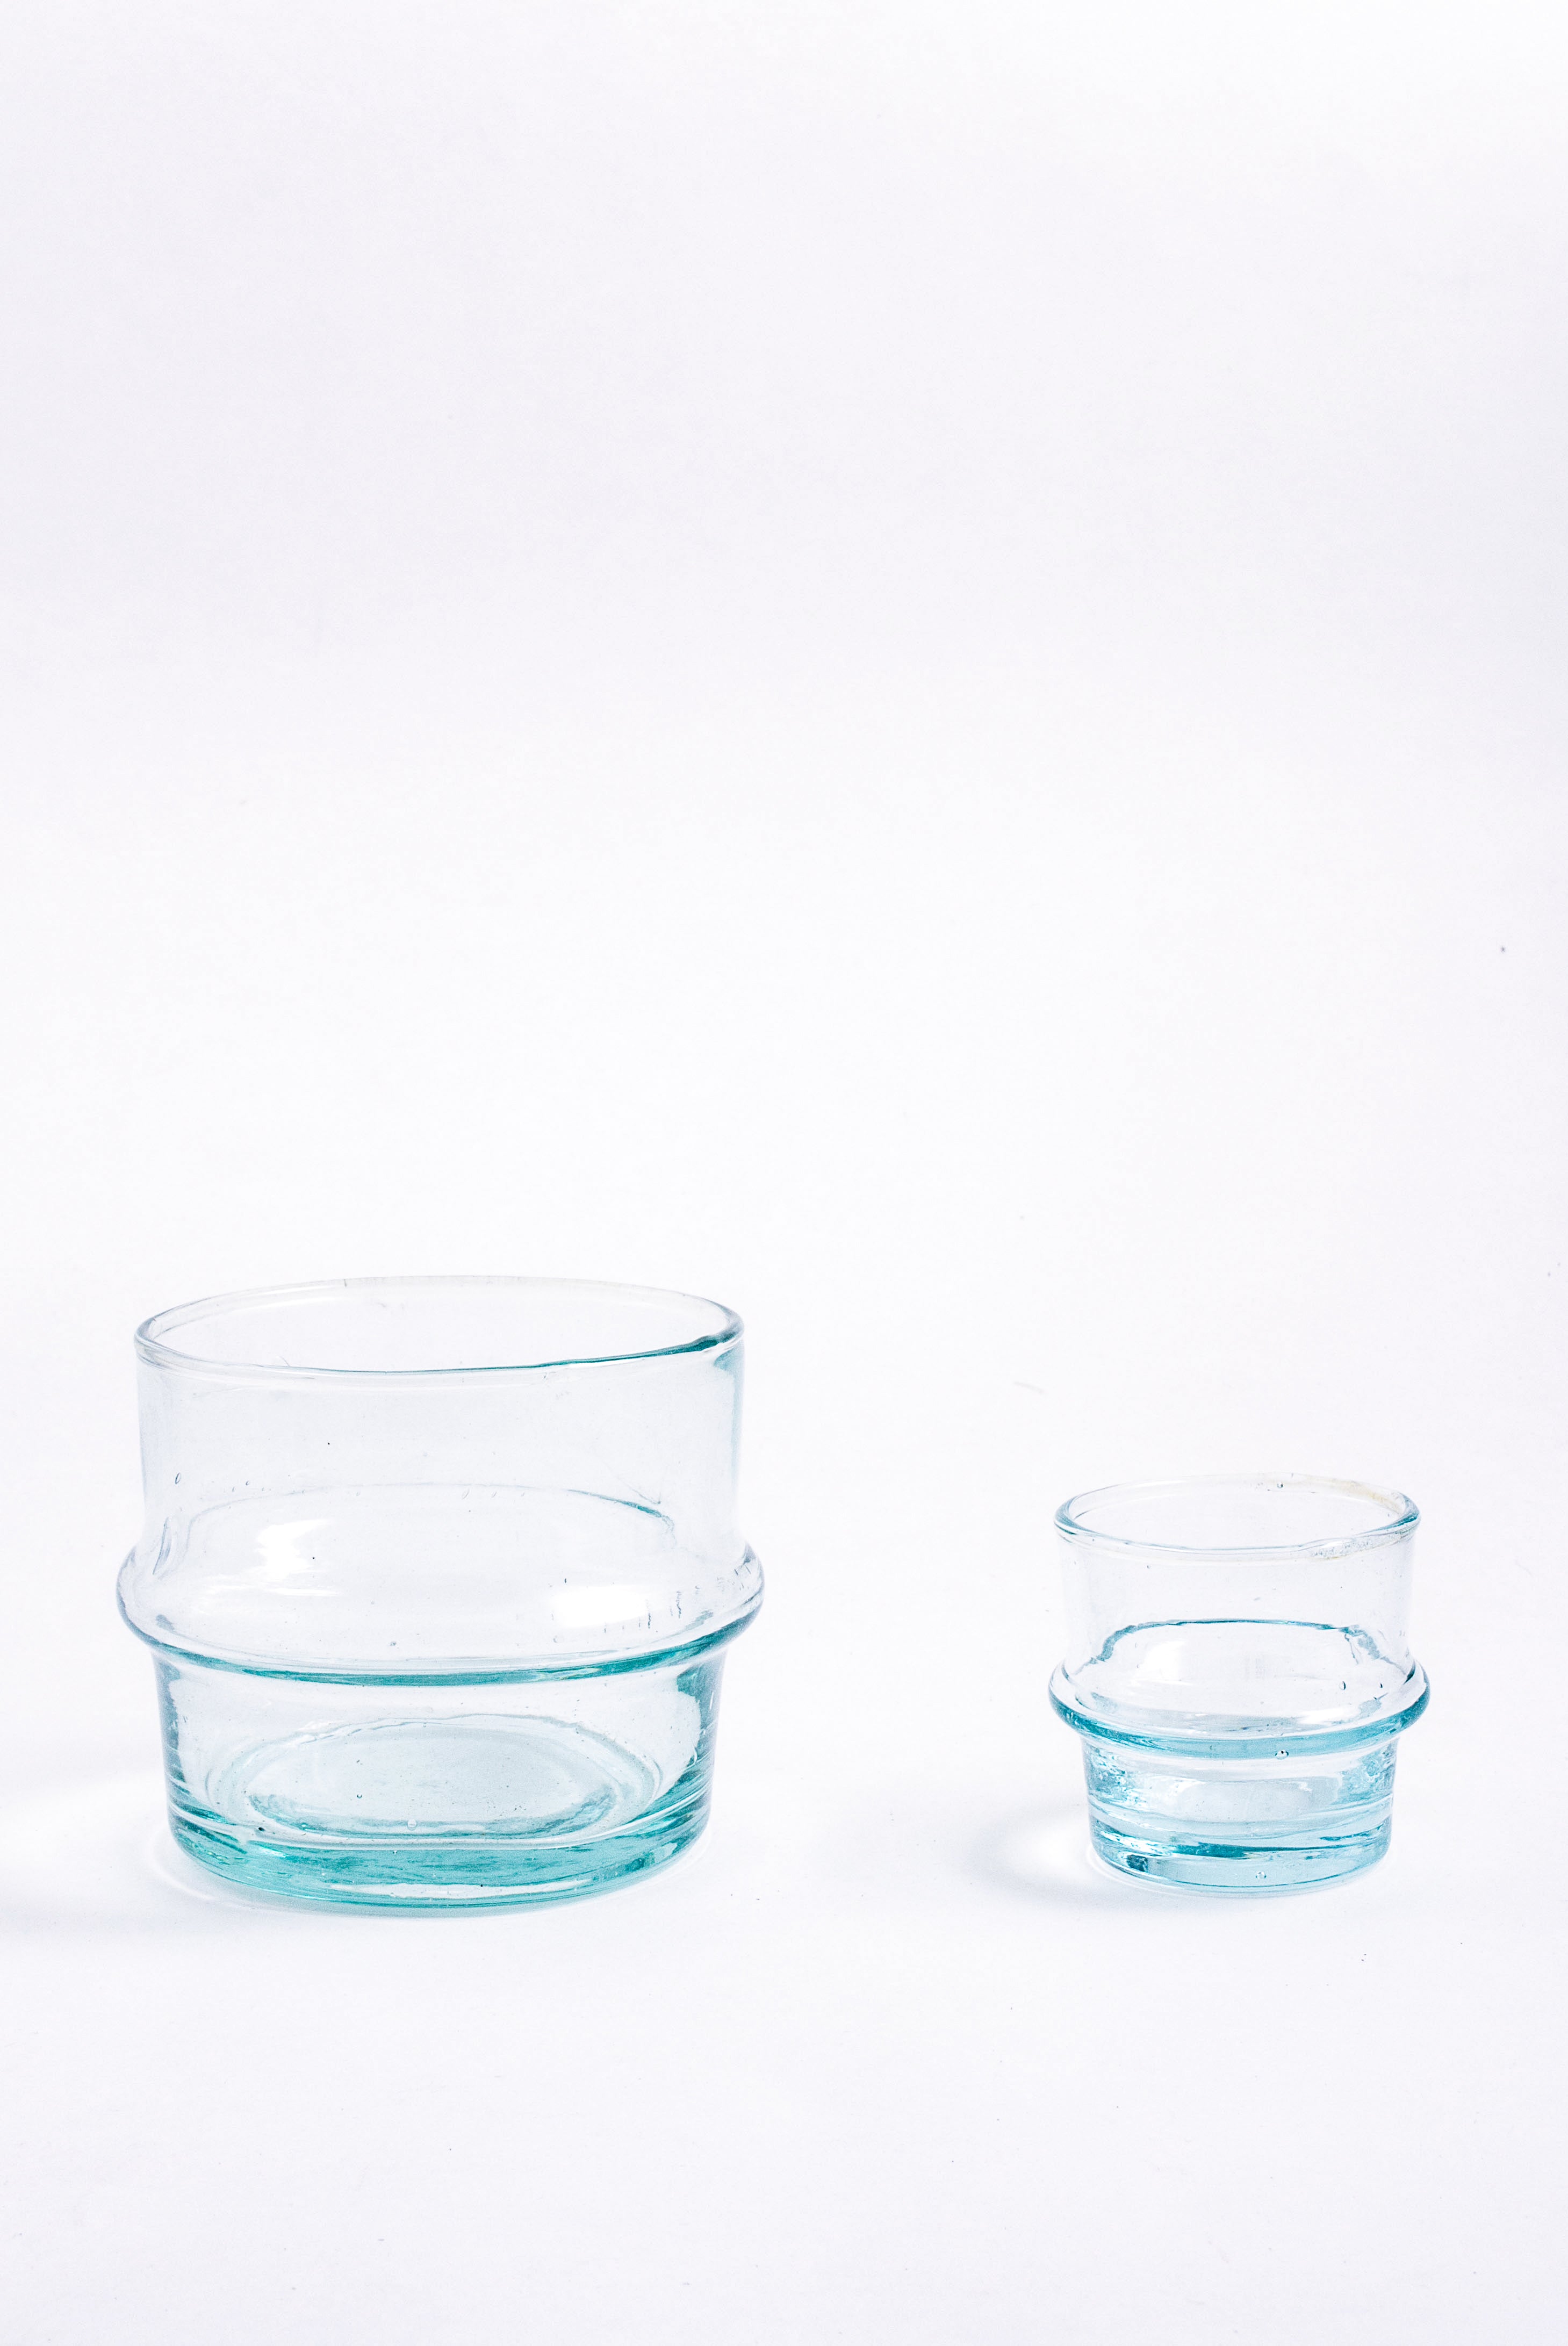 Beldi Mini Bowl Clear Glass Kessy Beldi Brand_Une Vie Nomade Kitchen_Drinkware Wine Glasses 8000-B20-C__8000-B25-C_346d1564-5702-4112-b1d5-d0d818e6dacc